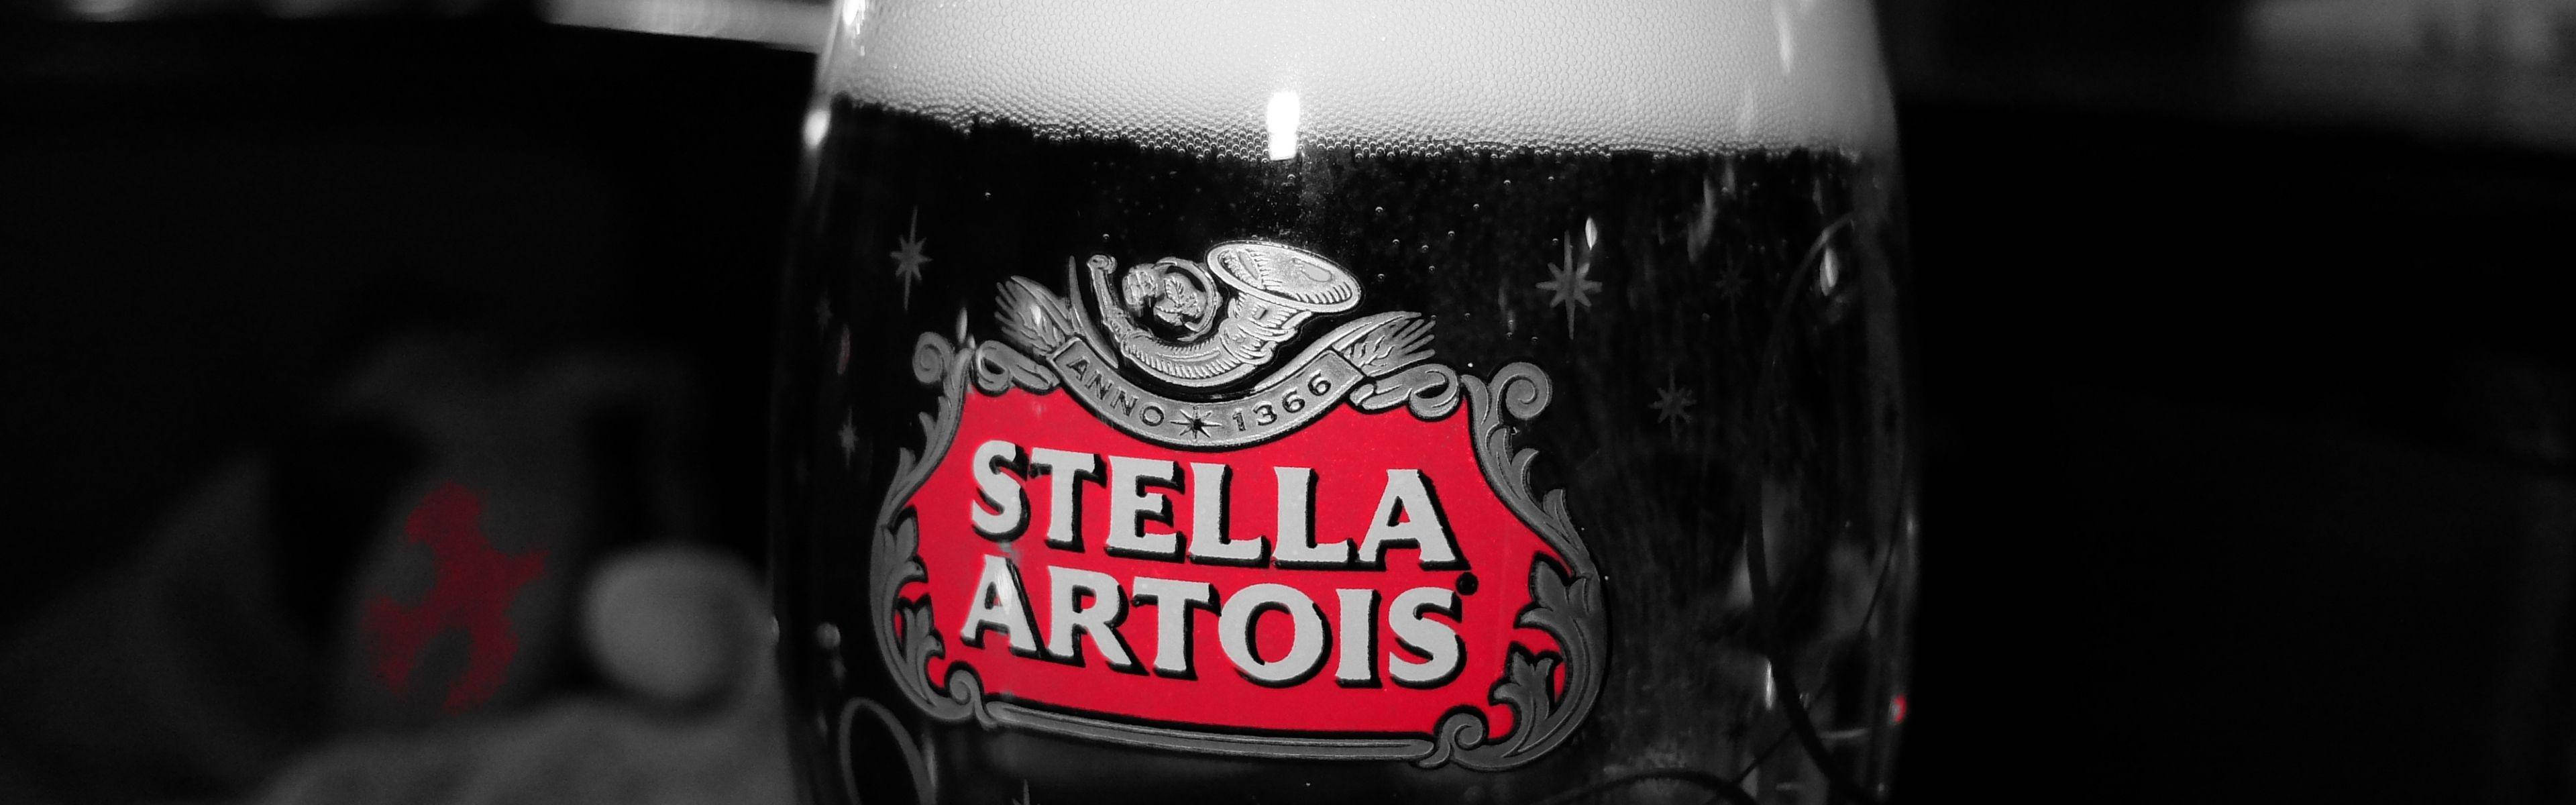 Stella Artois 3840 X 1200 Wallpaper